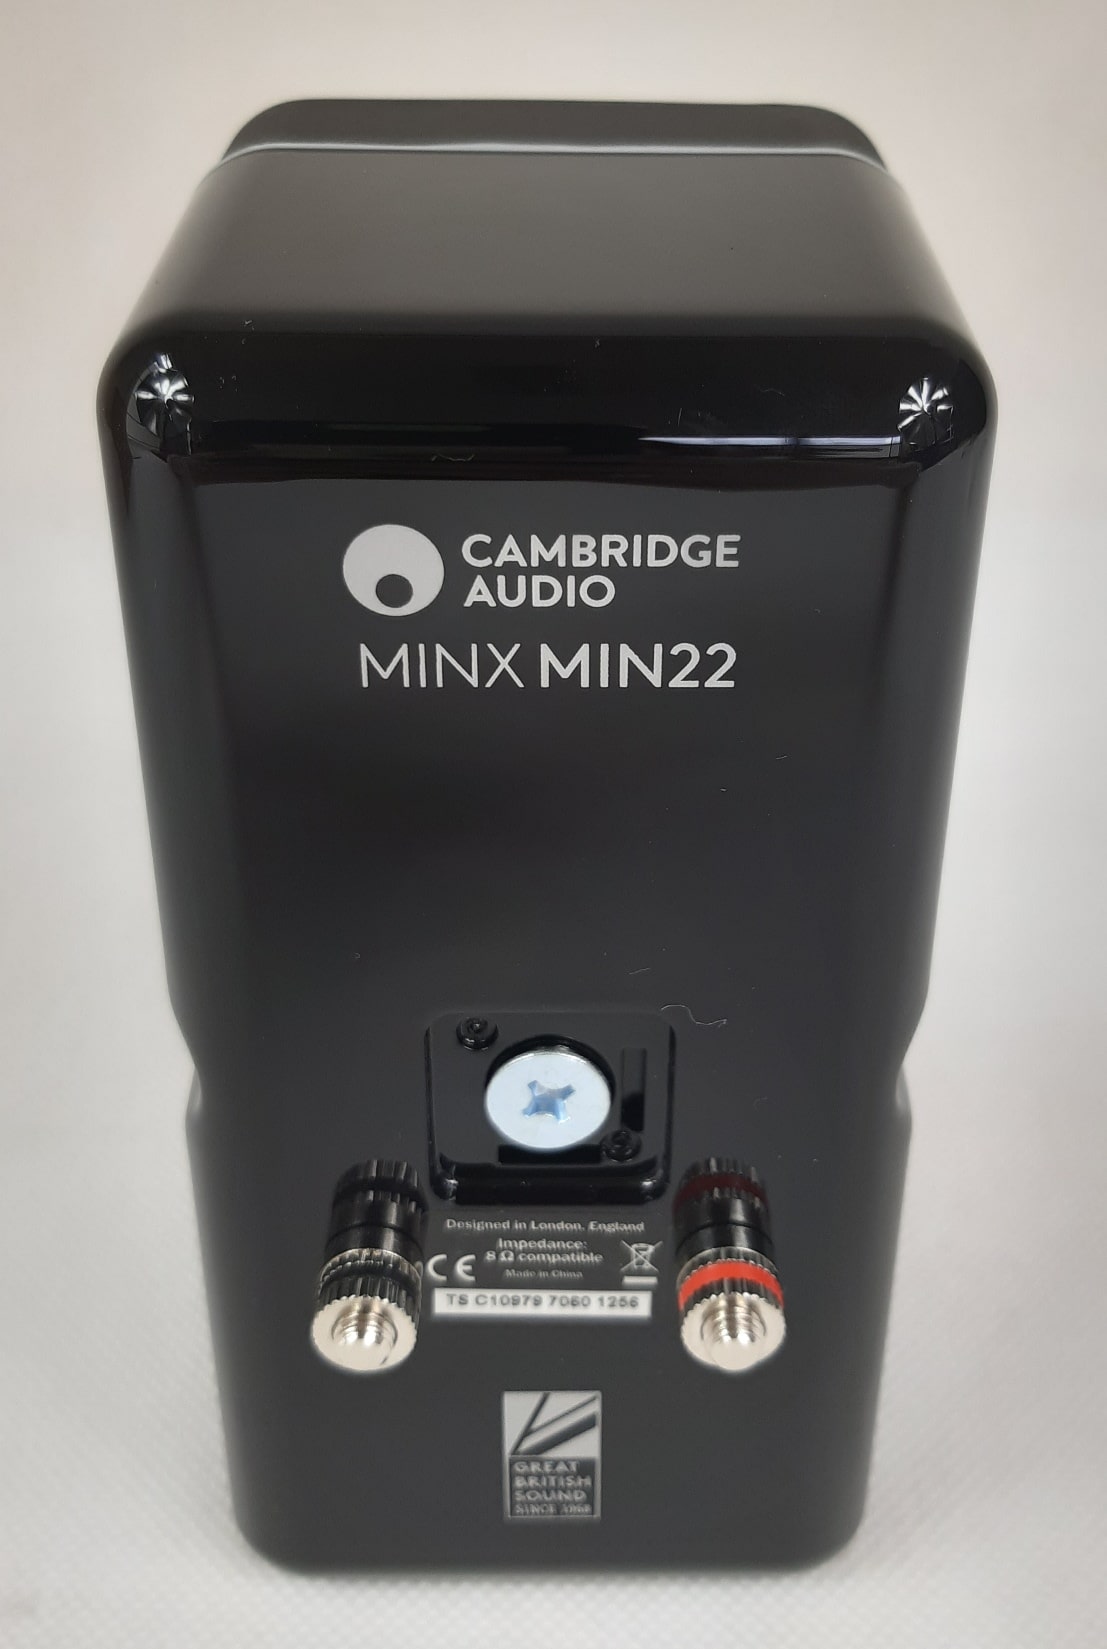 Cambridge Audio Minx Min 22 back 